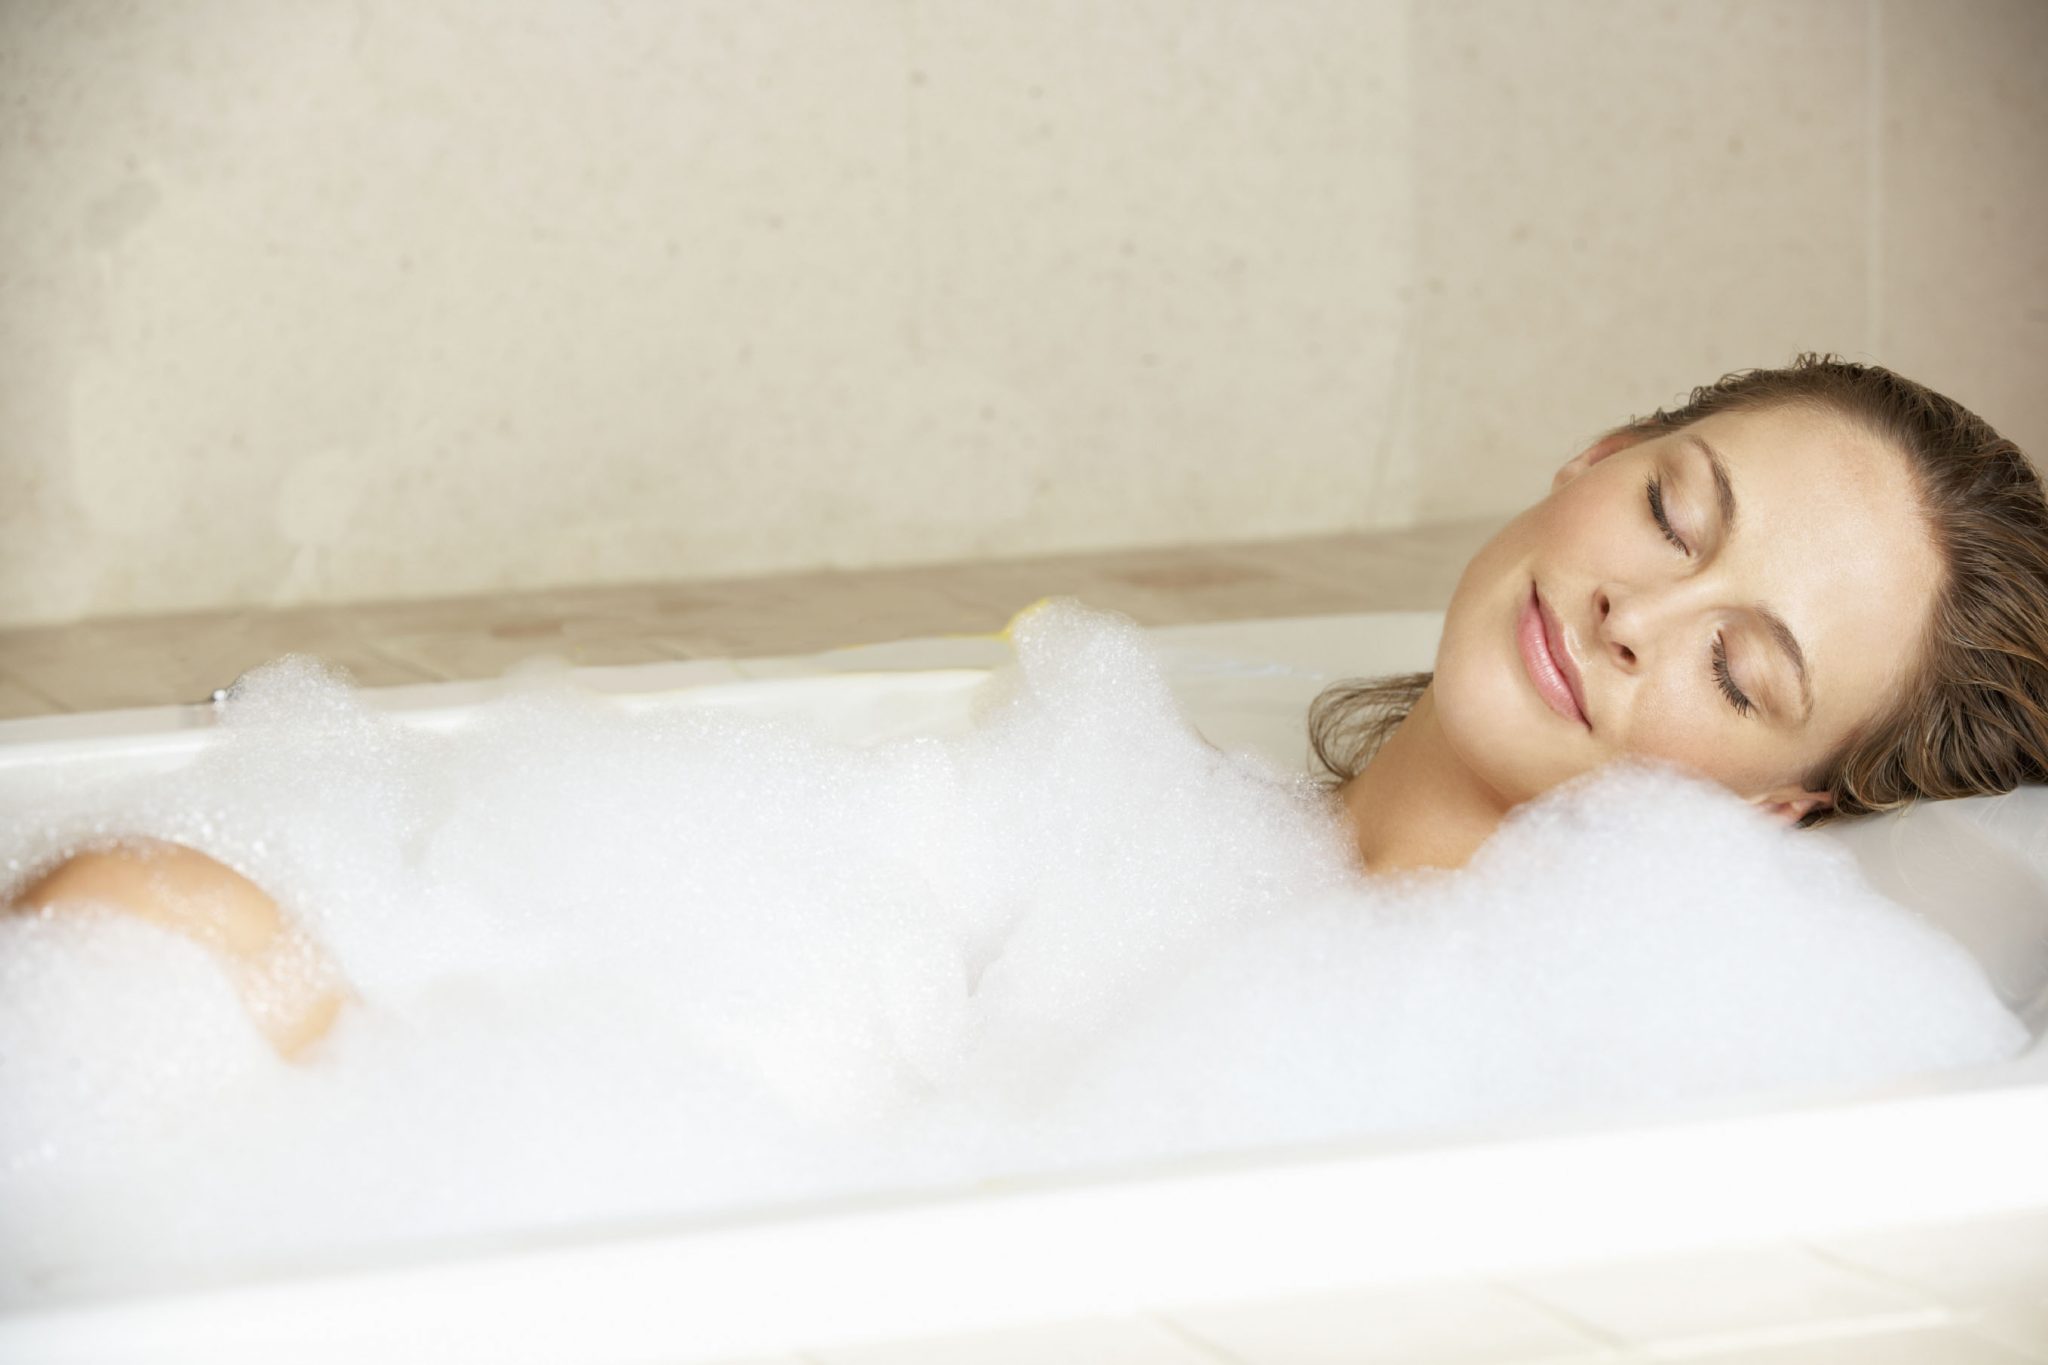 Is your Bathtub a hazard? 4 Tips to make your bathtub safer